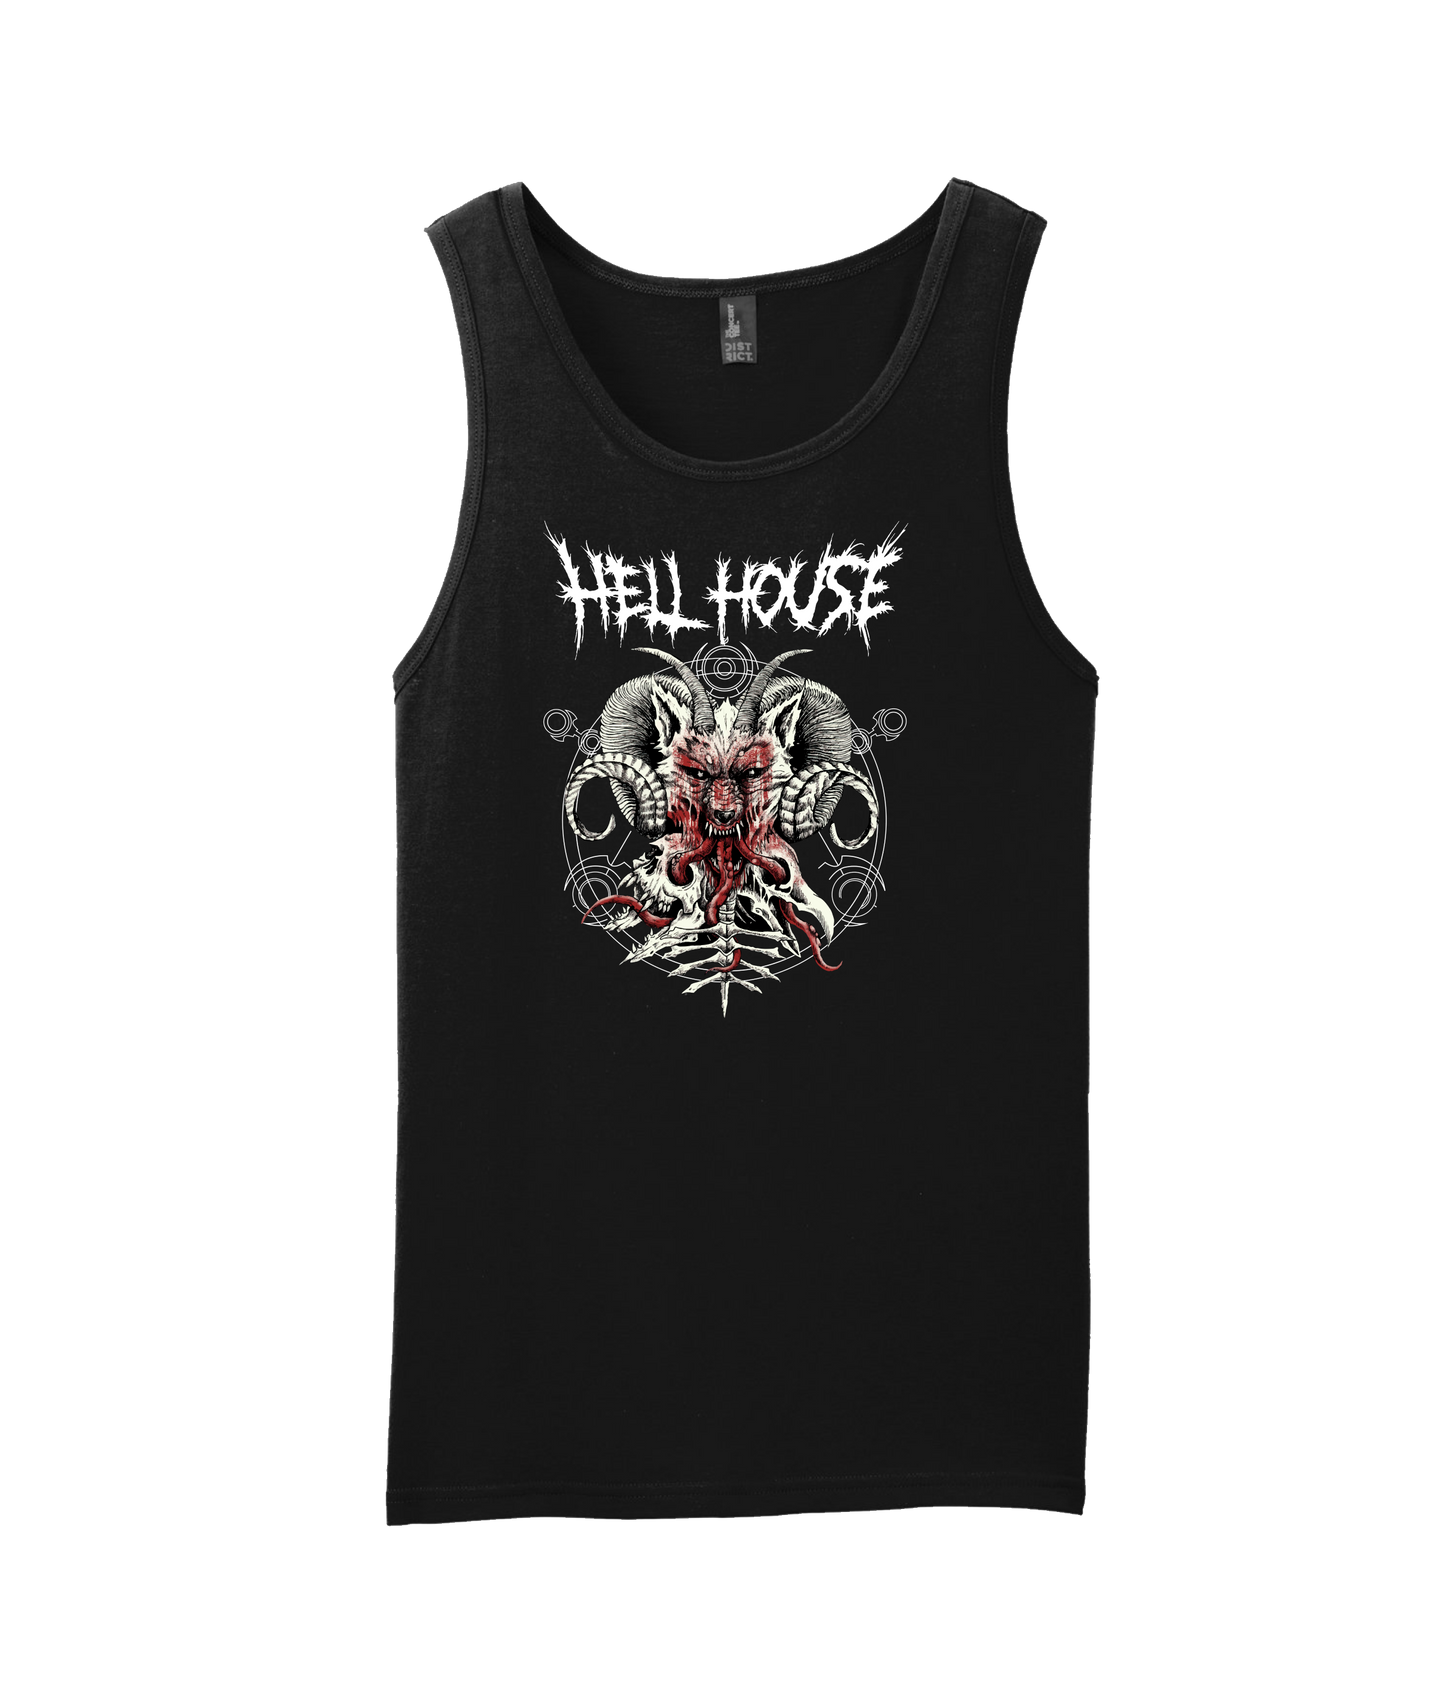 Hellhouse crypt - WOLFHORN - Black Tank Top